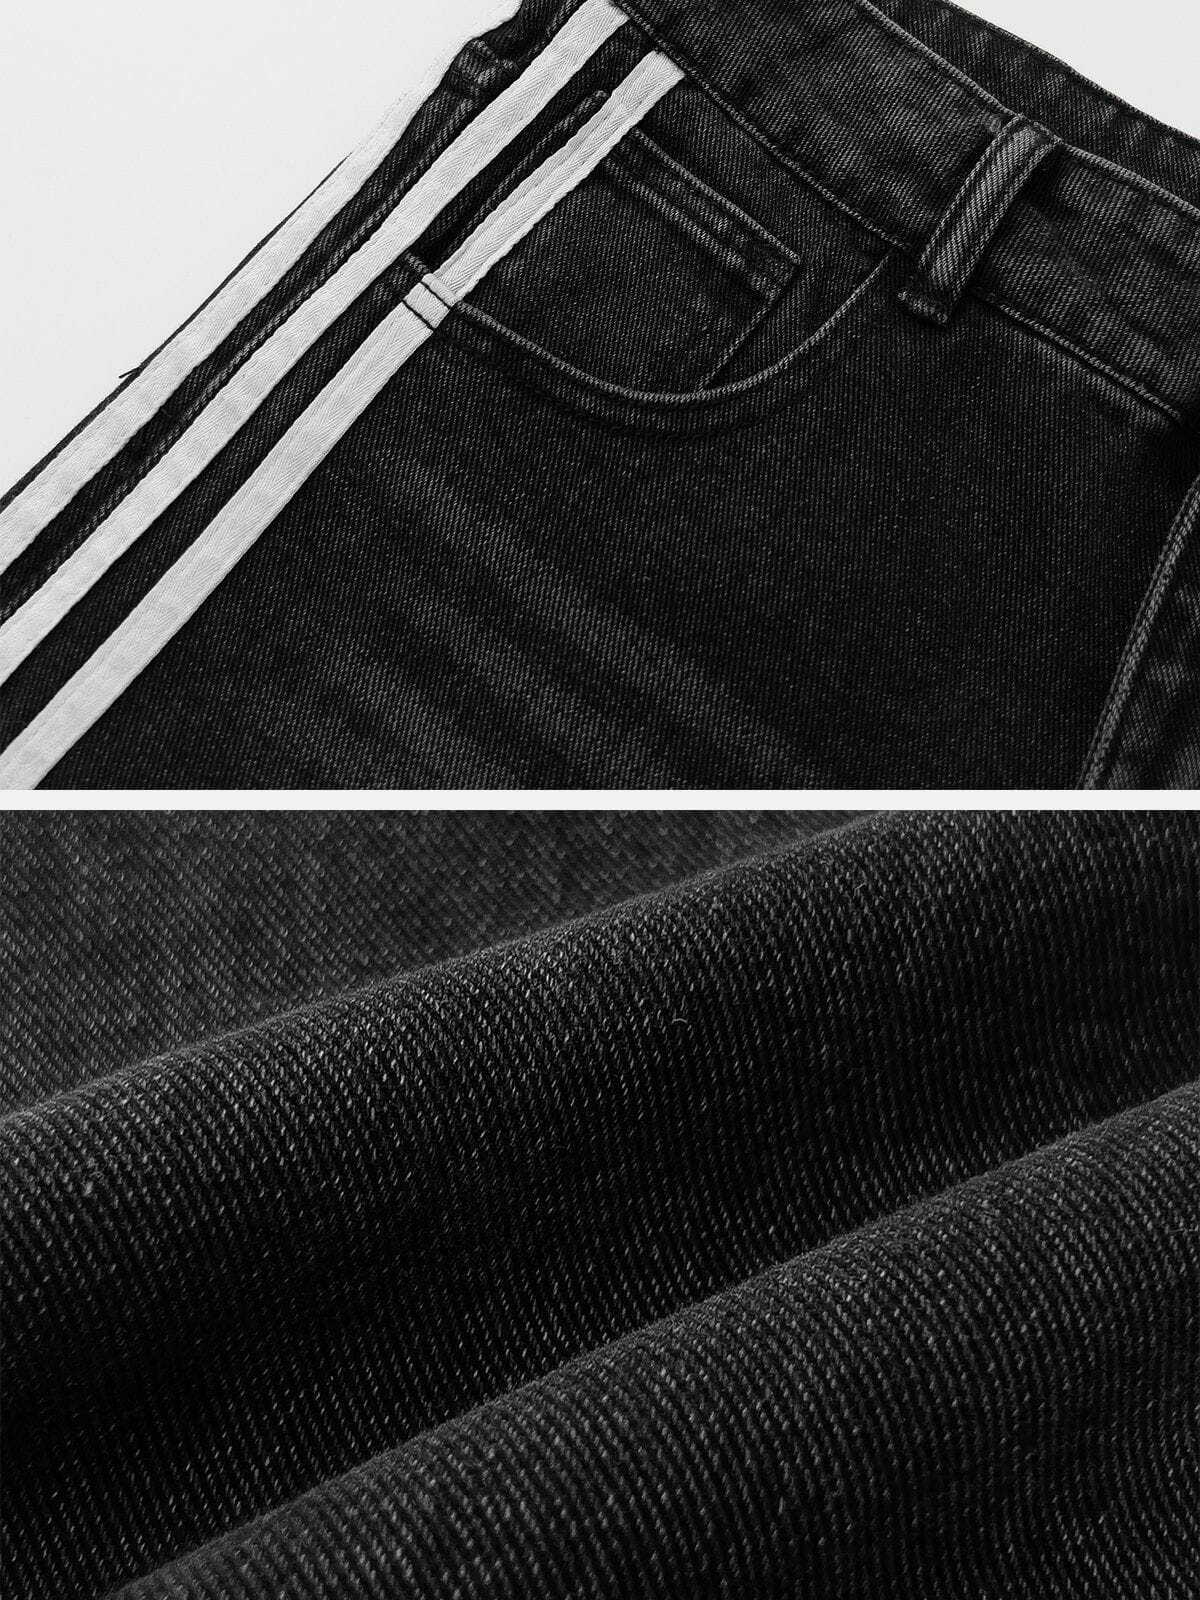 waterwash side stripes jeans edgy urban denim 1144